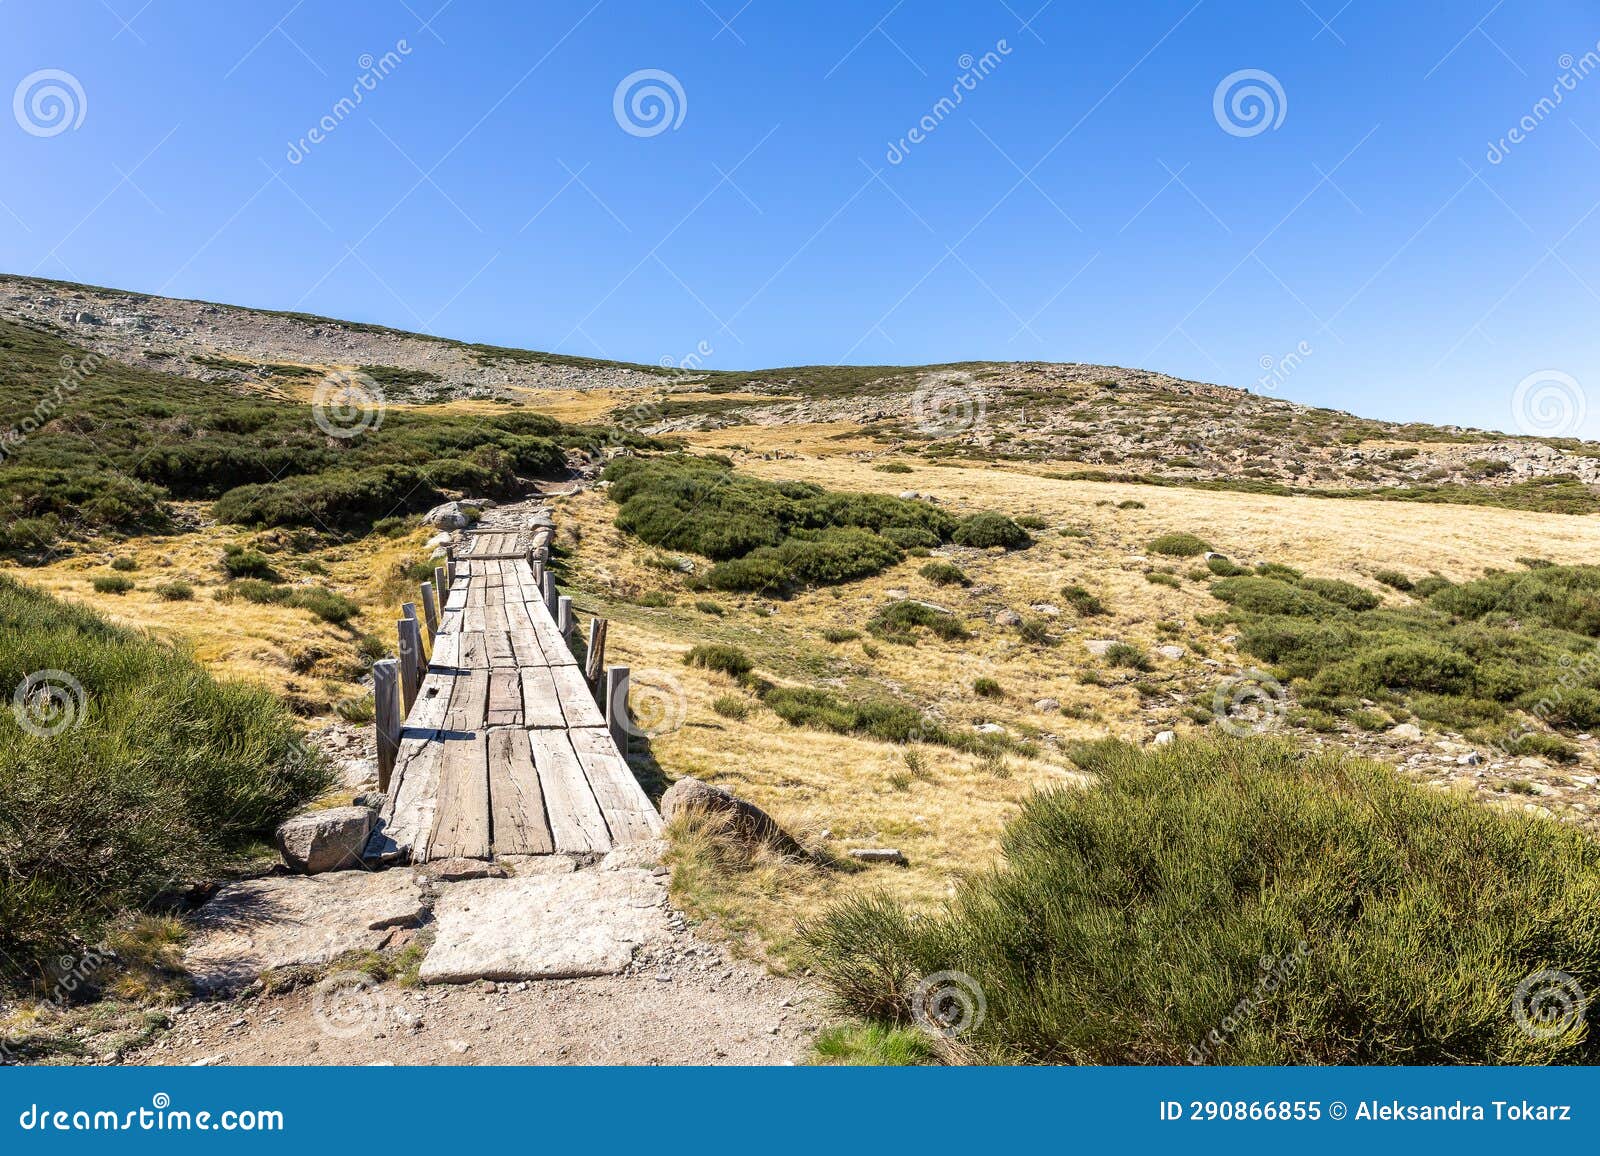 wooden platforms trail to the laguna grande de gredos in sierra de gredos mountains, spain